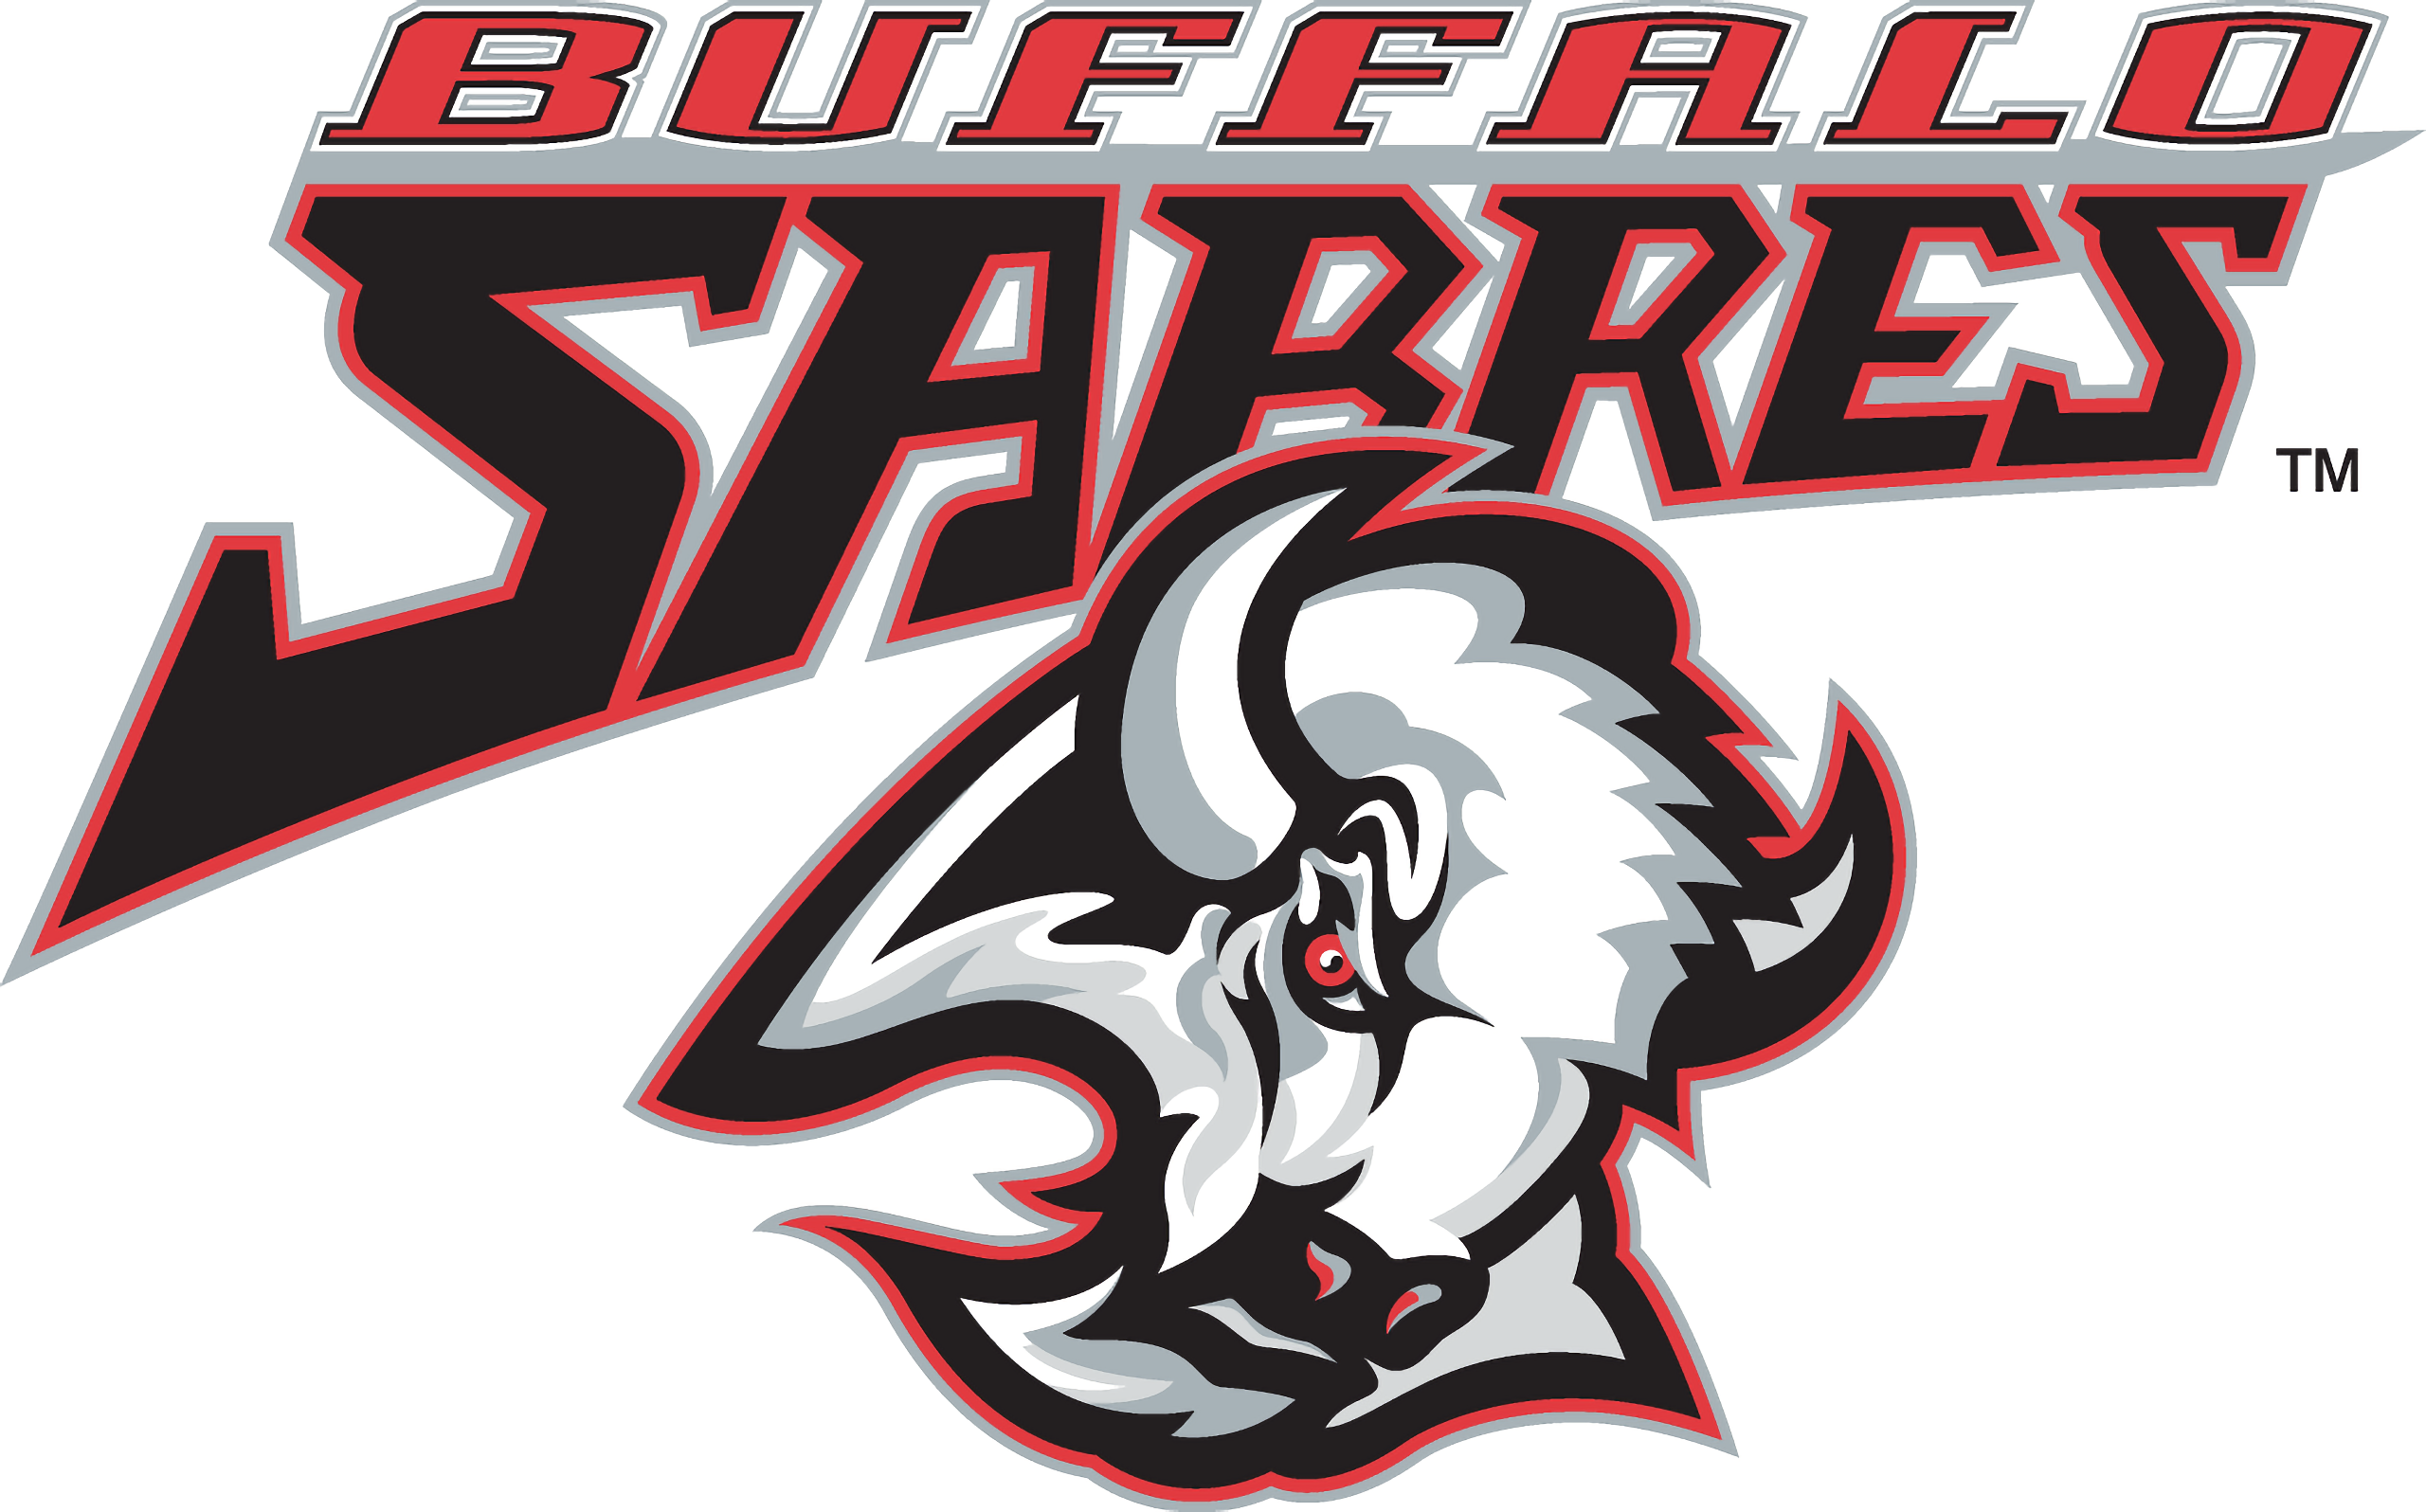 100+] Buffalo Sabres Backgrounds